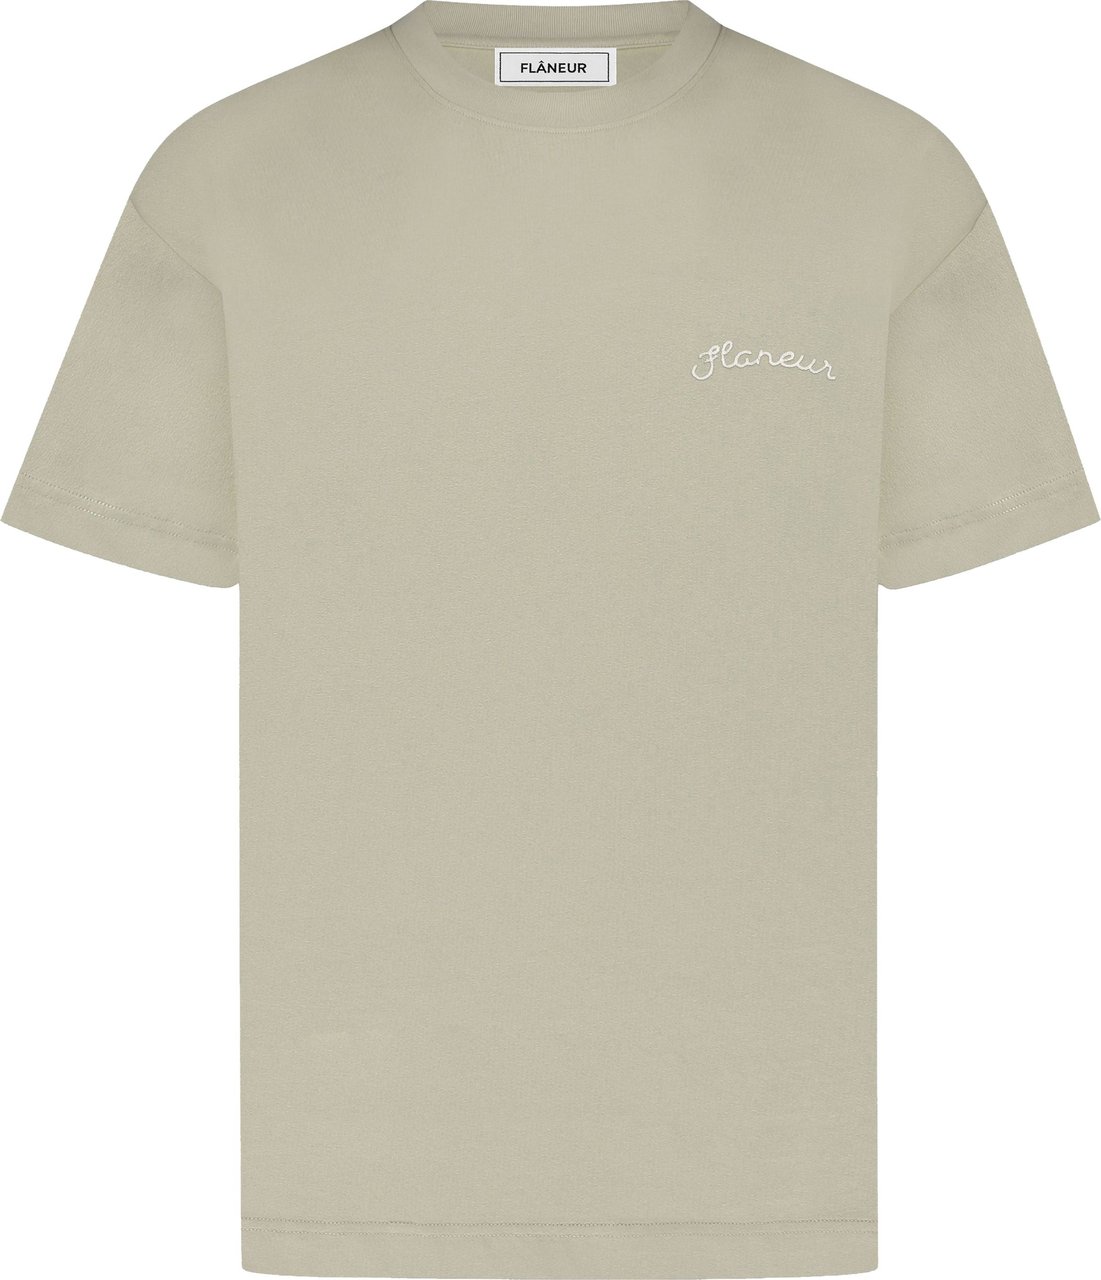 FLÂNEUR Signature T-Shirt Beige Beige